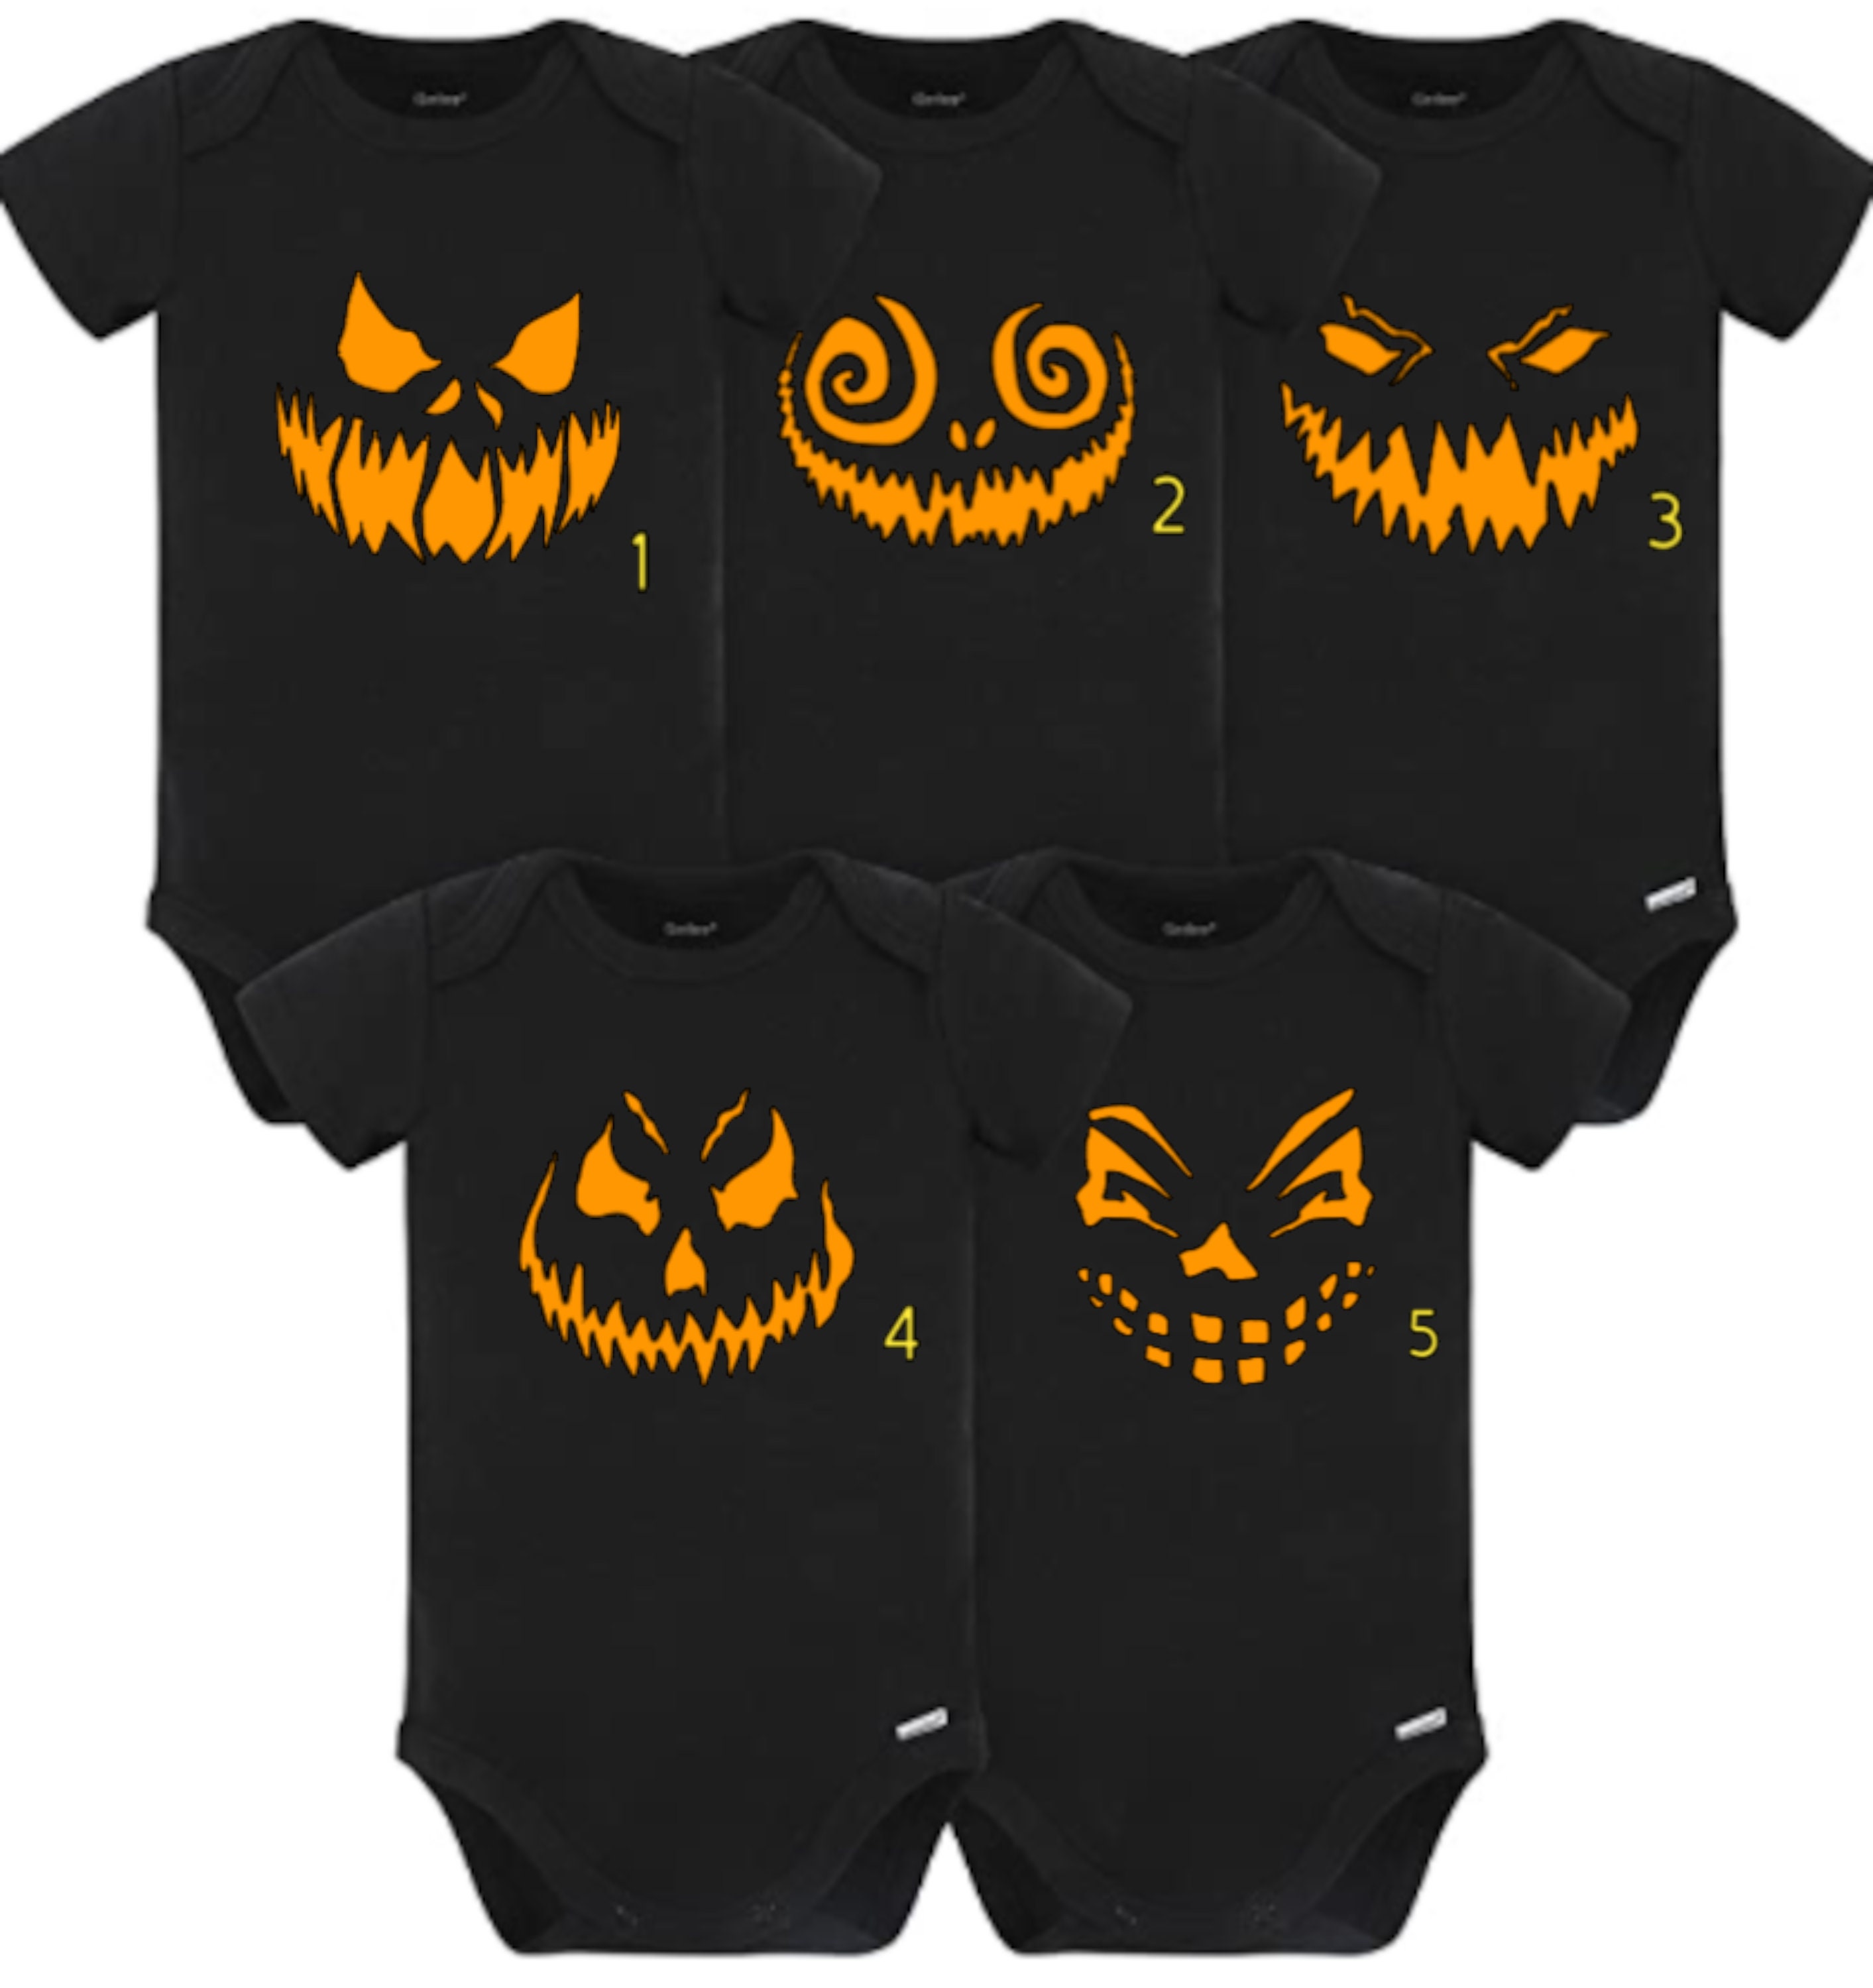 Jack-o-lantern Bodysuit for Babies 